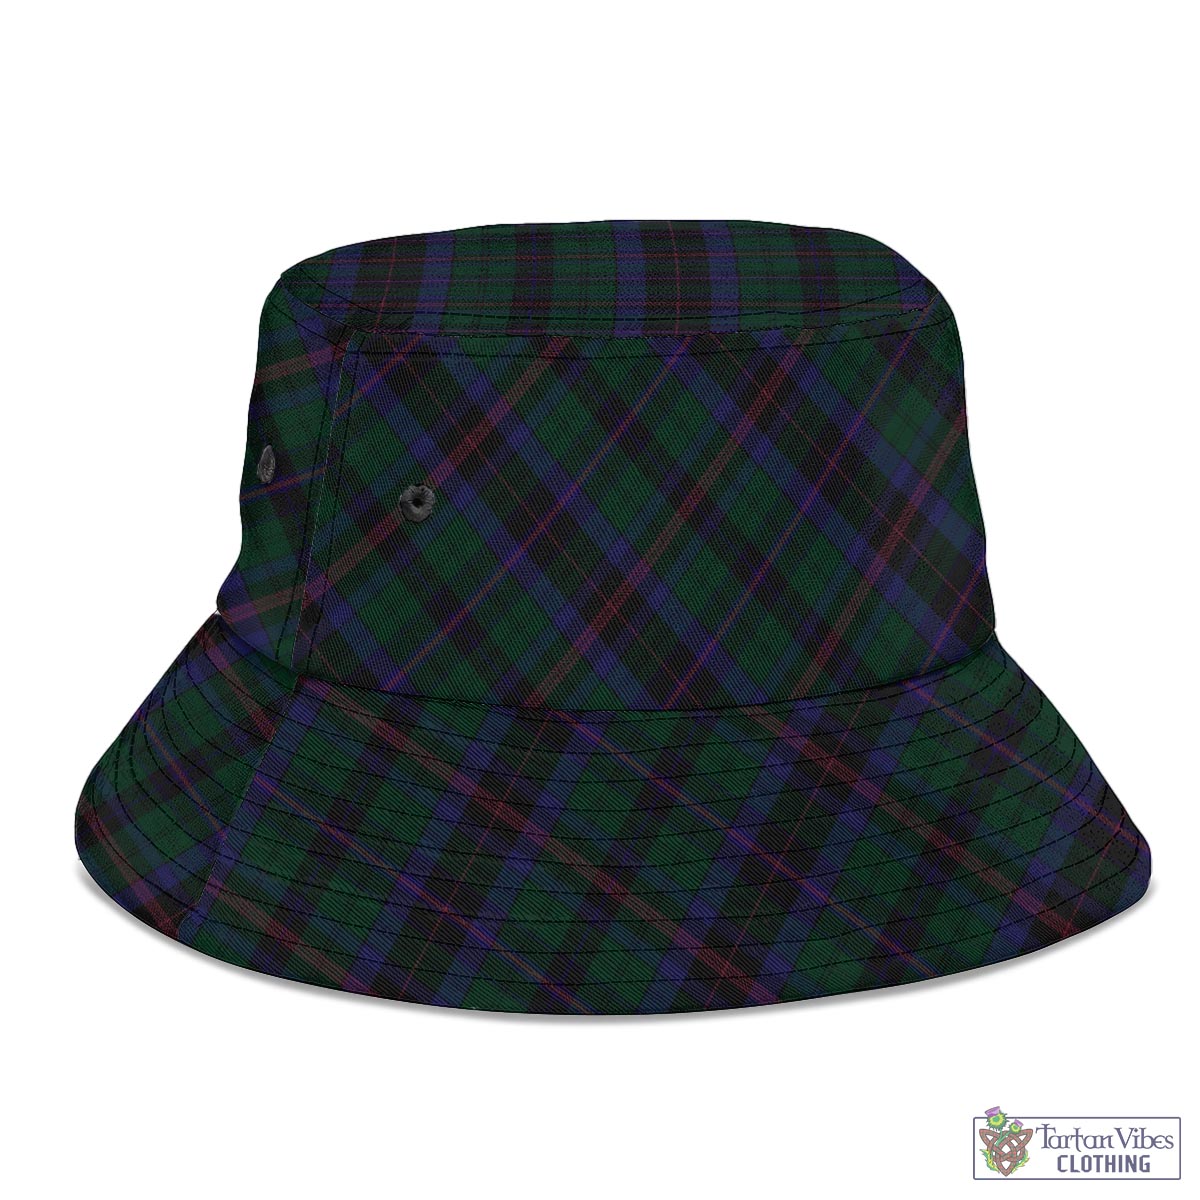 Tartan Vibes Clothing Phillips of Wales Tartan Bucket Hat